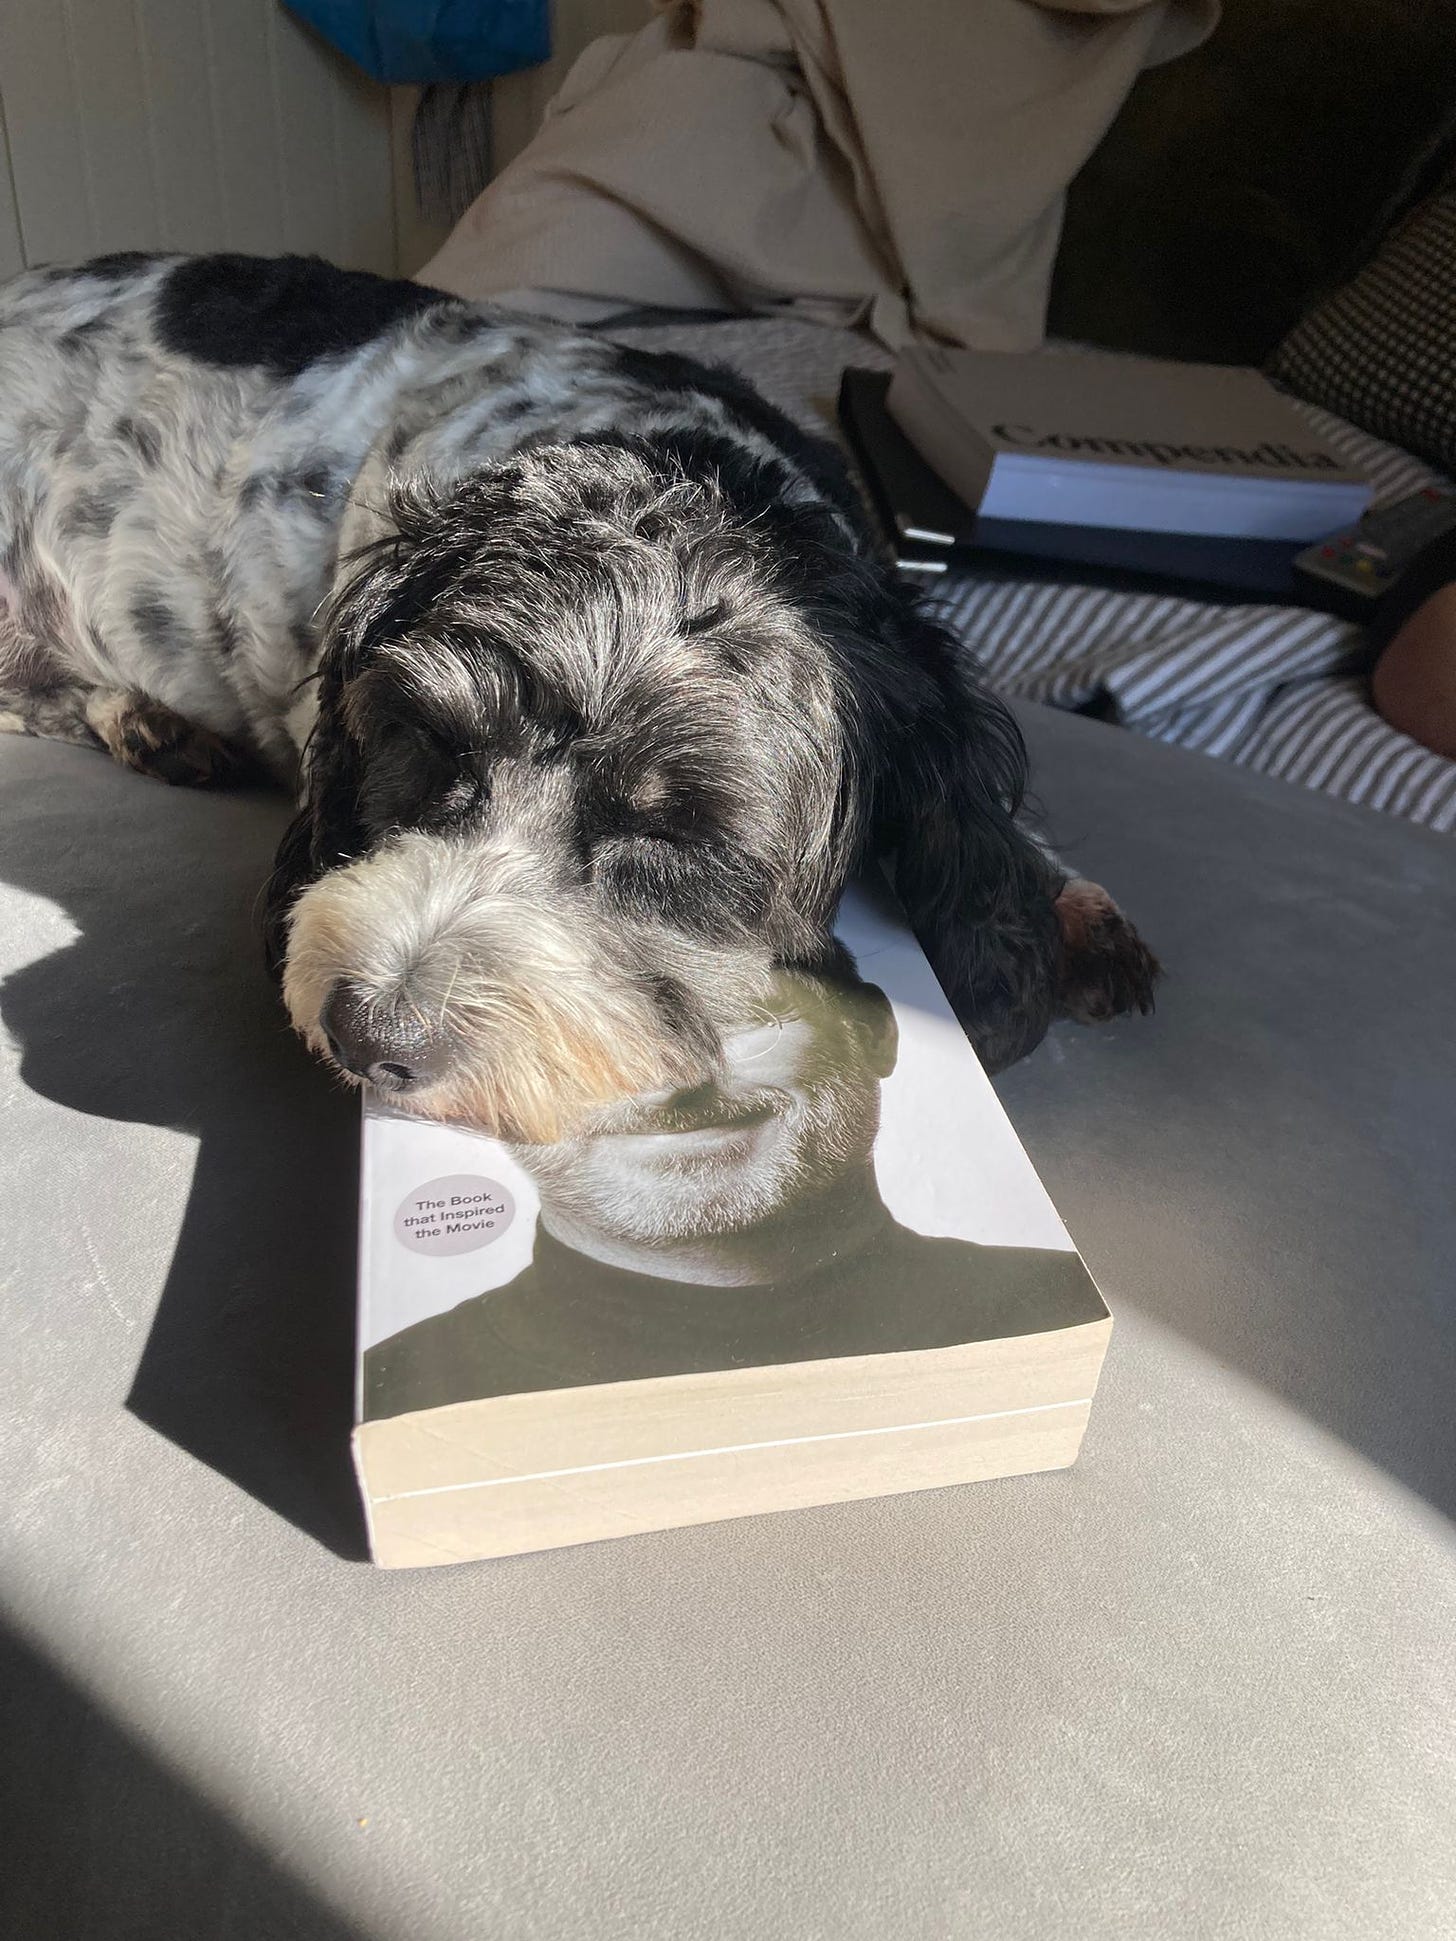 Alex Debecker’s dog Mila sleeping with her head on the Steve Jobs book